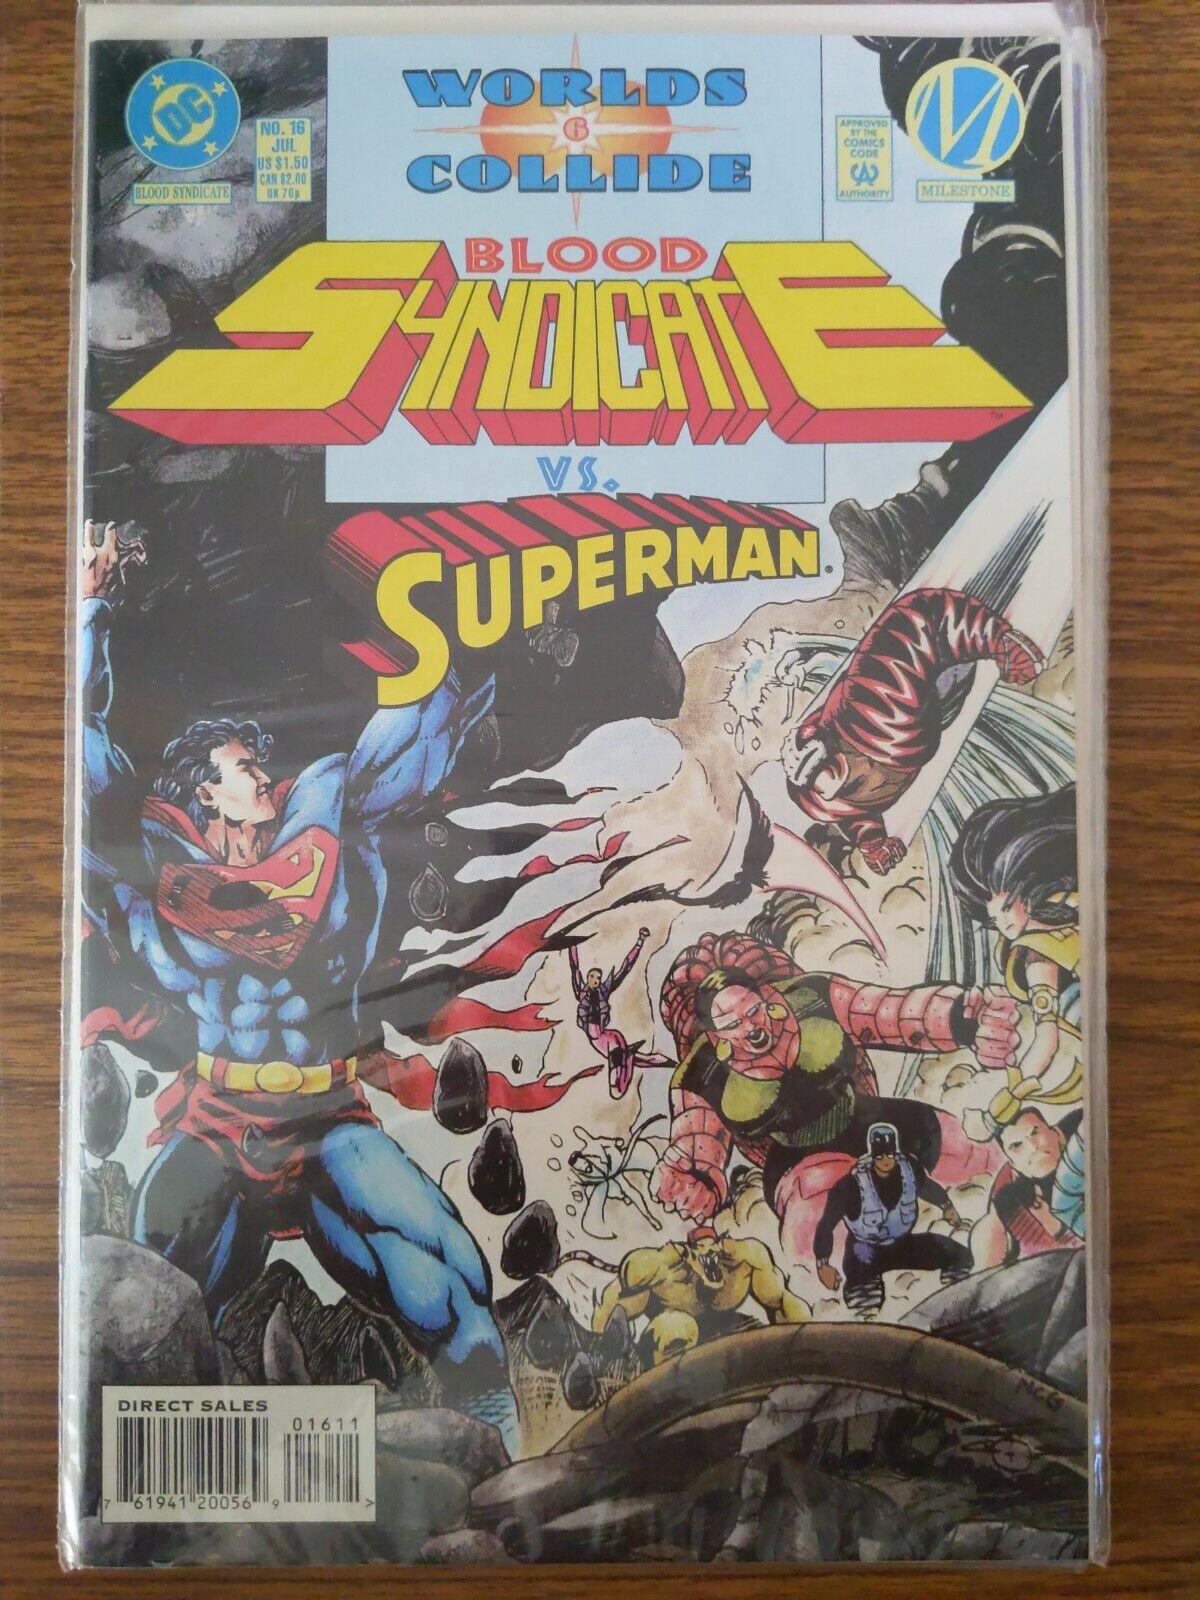 Worlds Collide #6 Blood Syndicate vs Superman #16 DC Milestone Comics 1994 